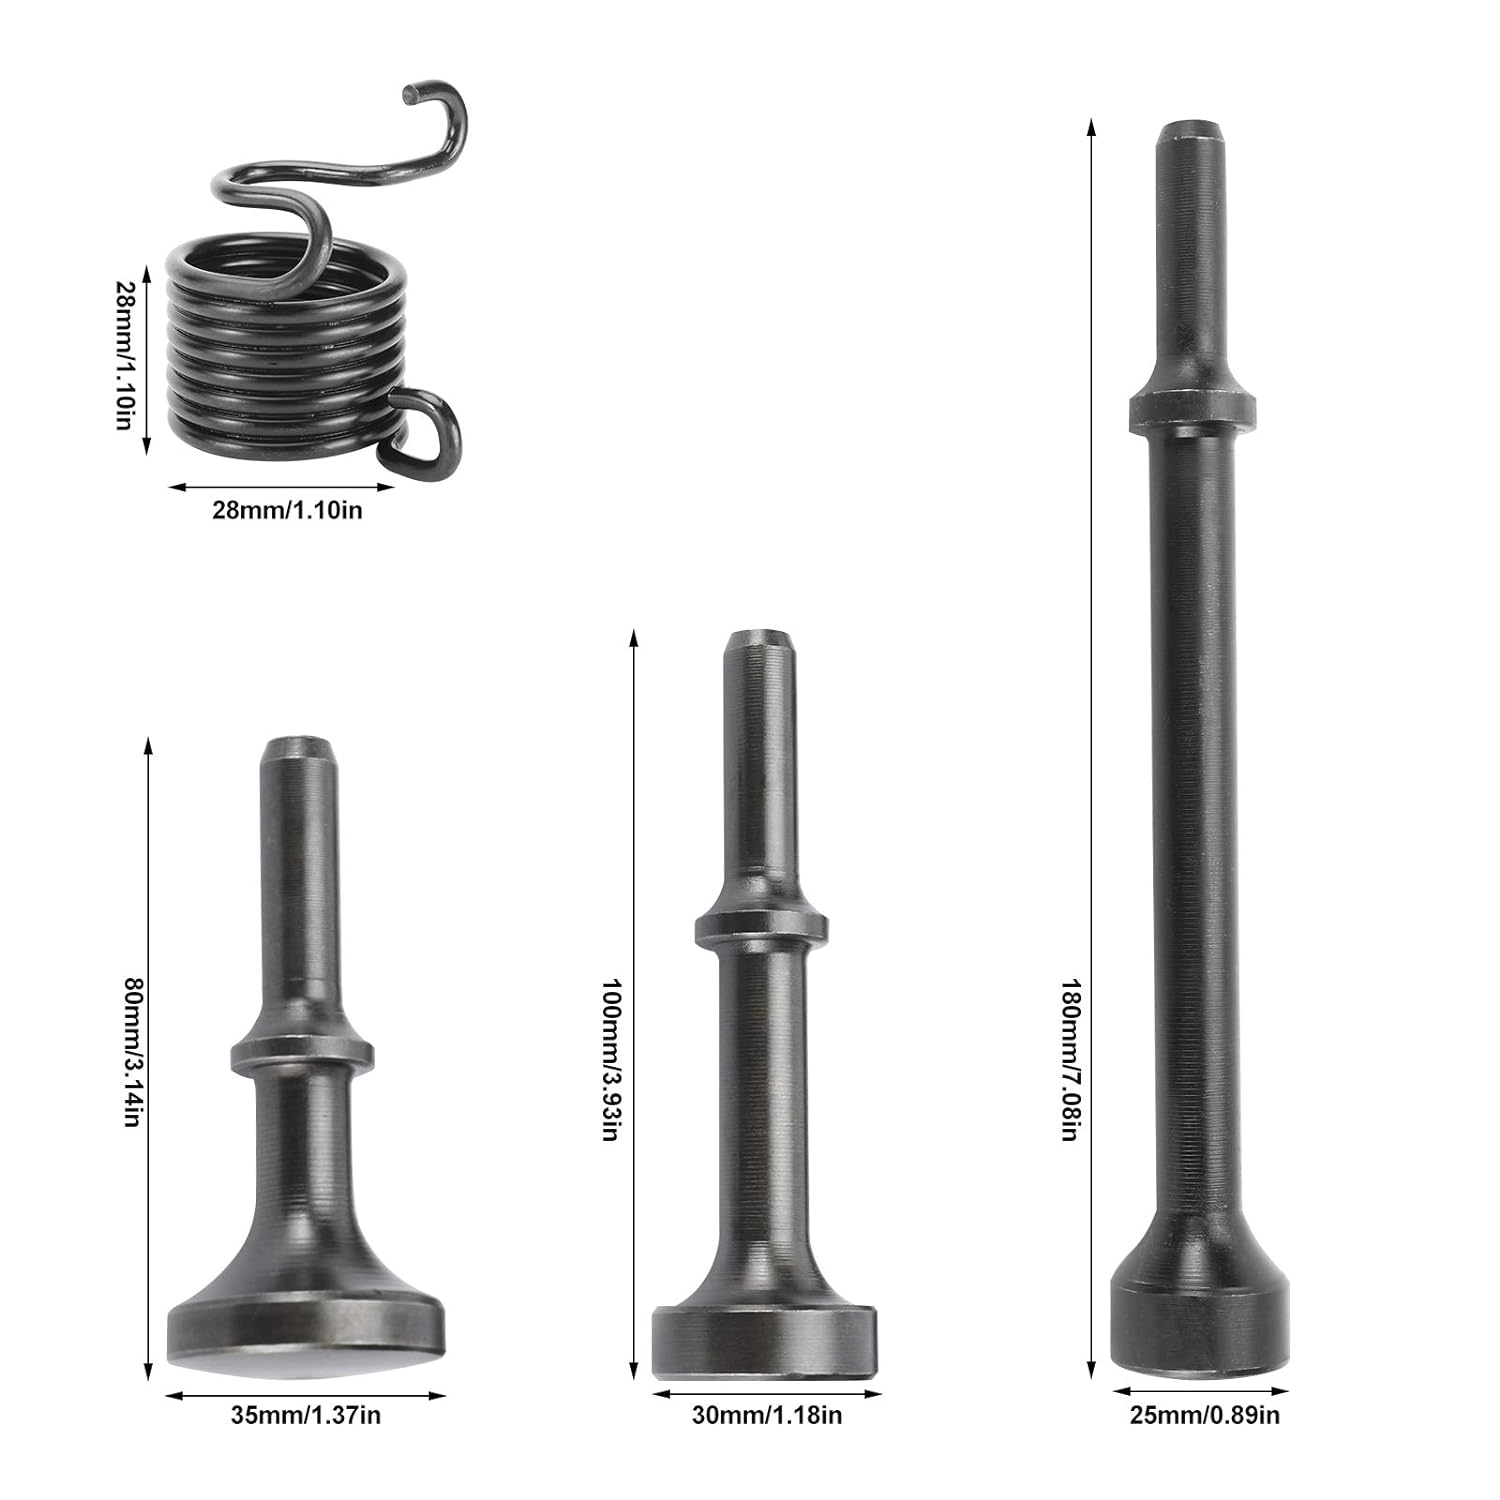 Generic KUNTEC 4 Pcs Smoothing Pneumatic Air Hammer Pneumatic Chisel Bits Tools Kit